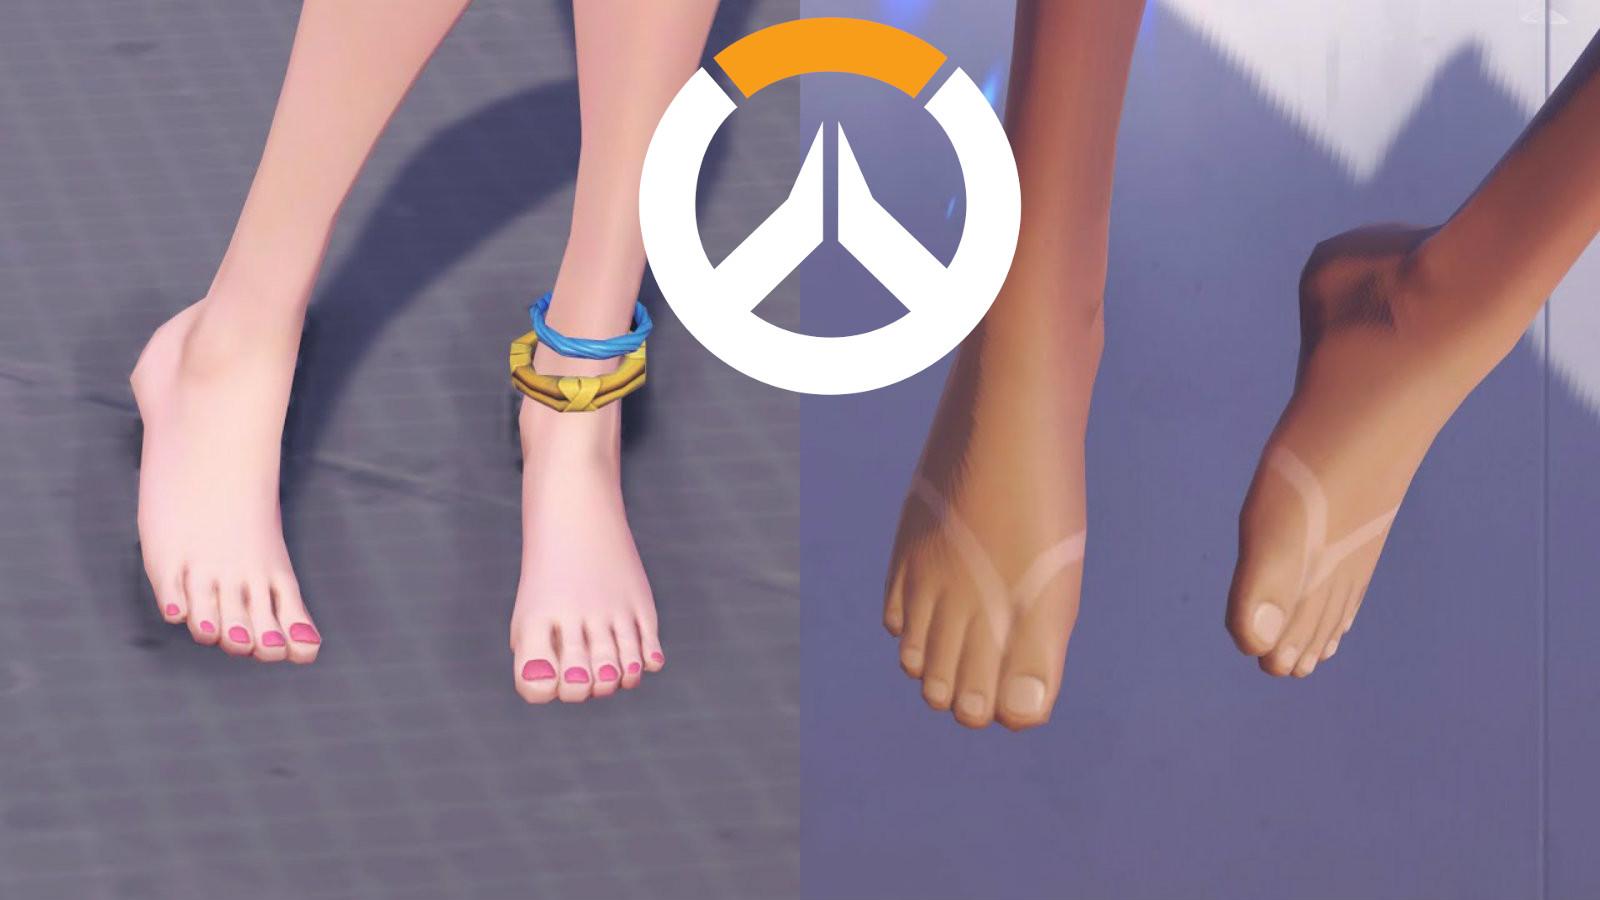 Pharah and D.va's feet